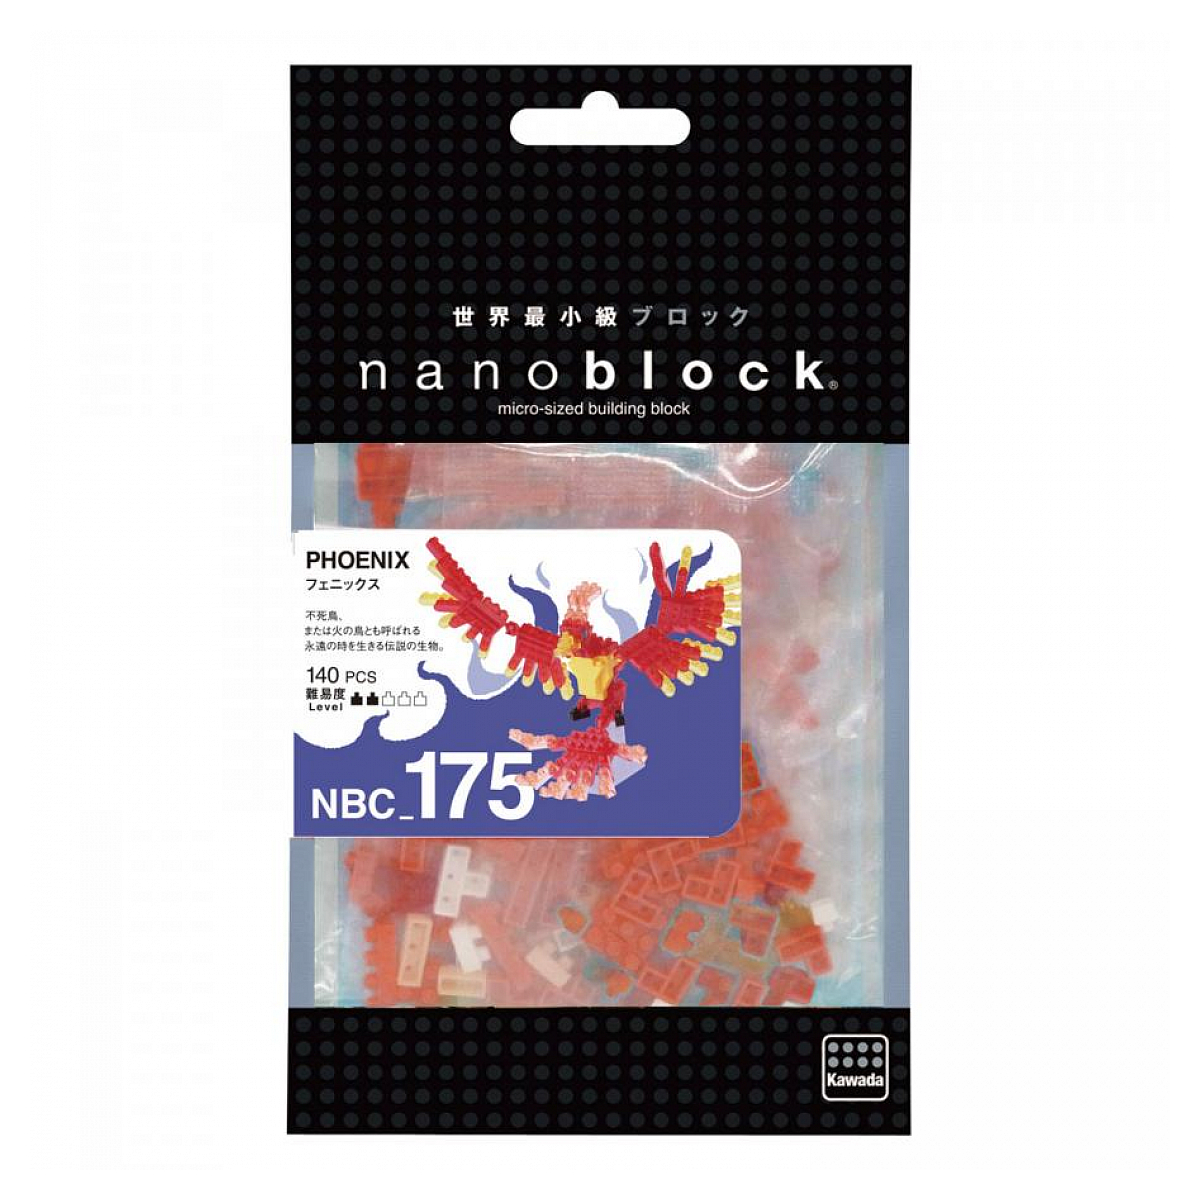 Nanoblock phoenix 175 pieces